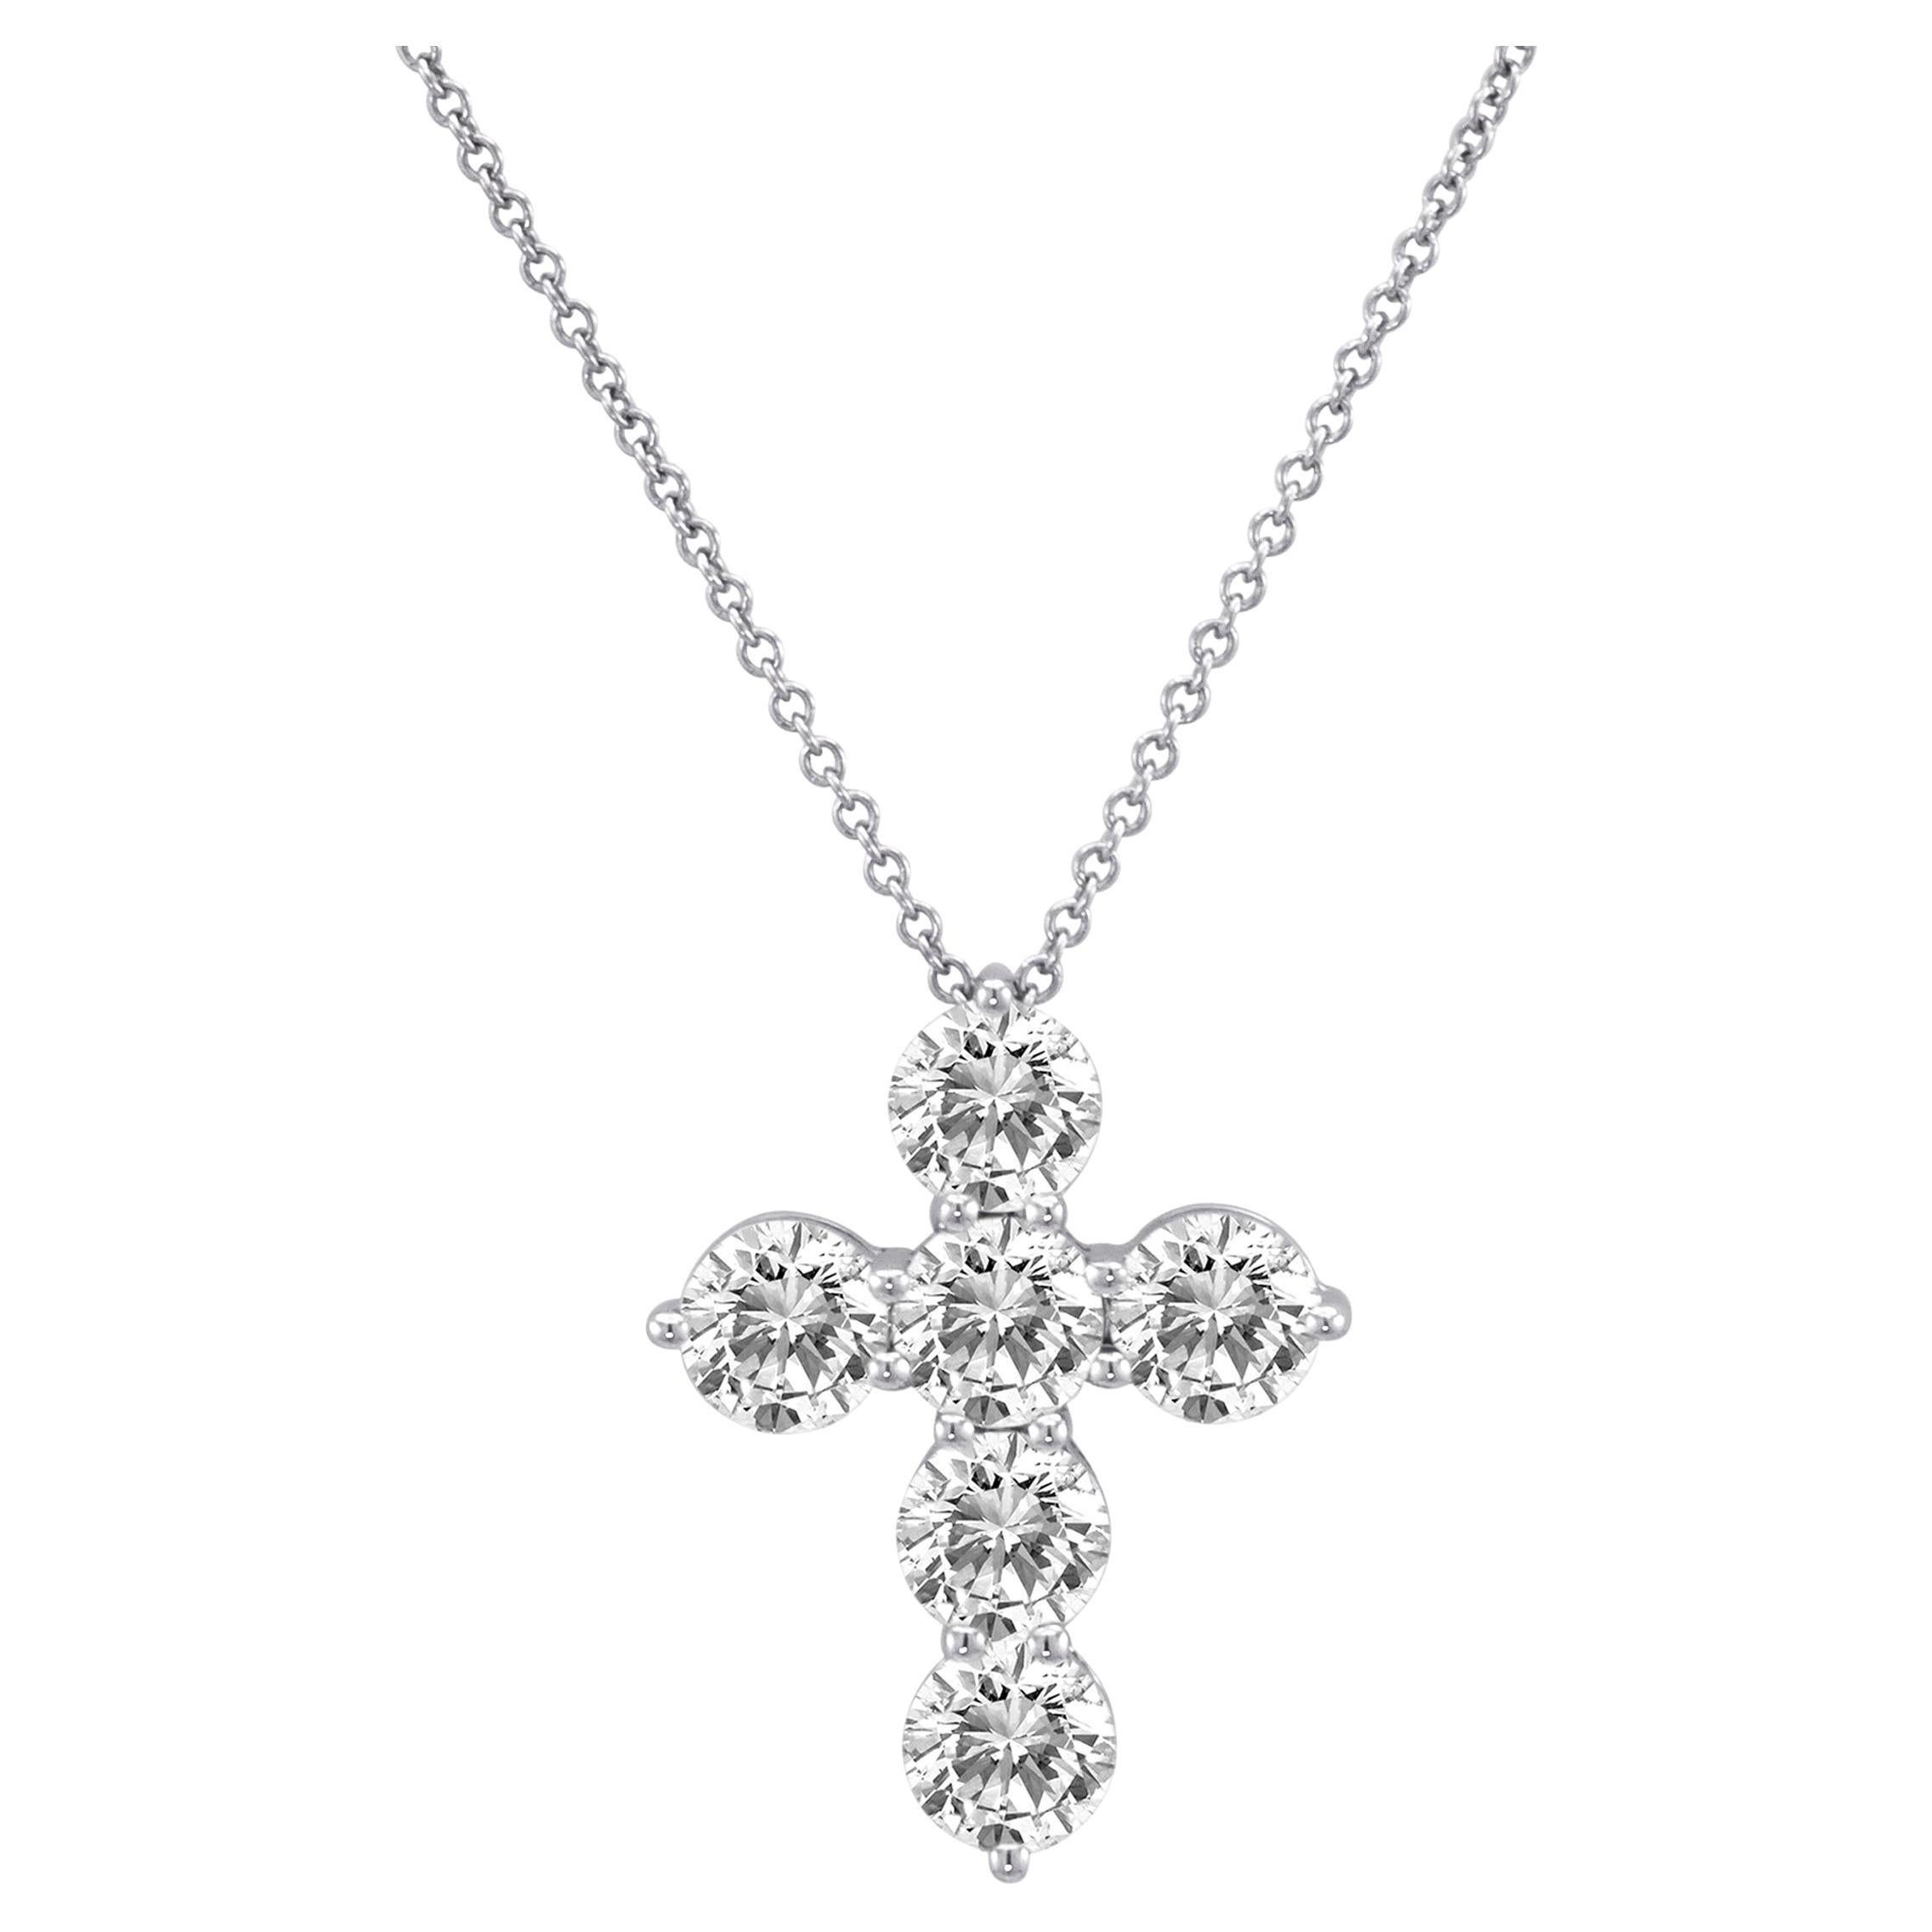 Diana M. 18K 1,50 ct. tw., Diana M. Diamant-Kreuz-Anhänger-Halskette